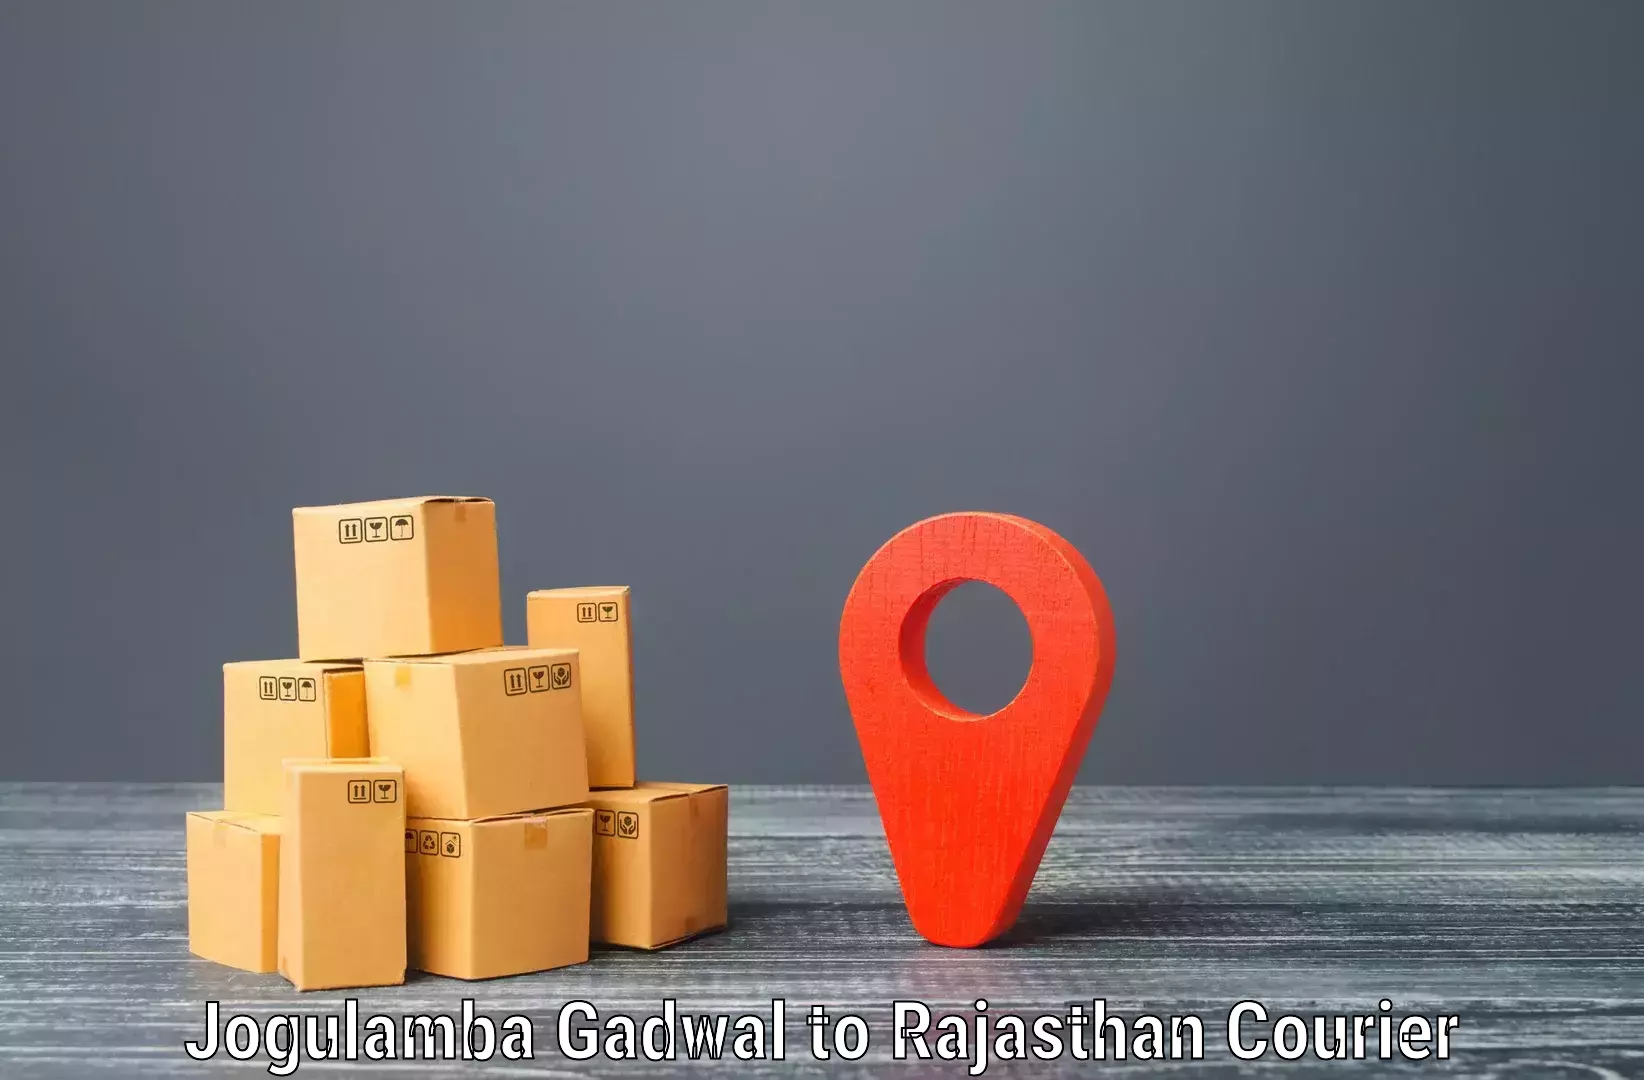 Courier service comparison Jogulamba Gadwal to Pilani